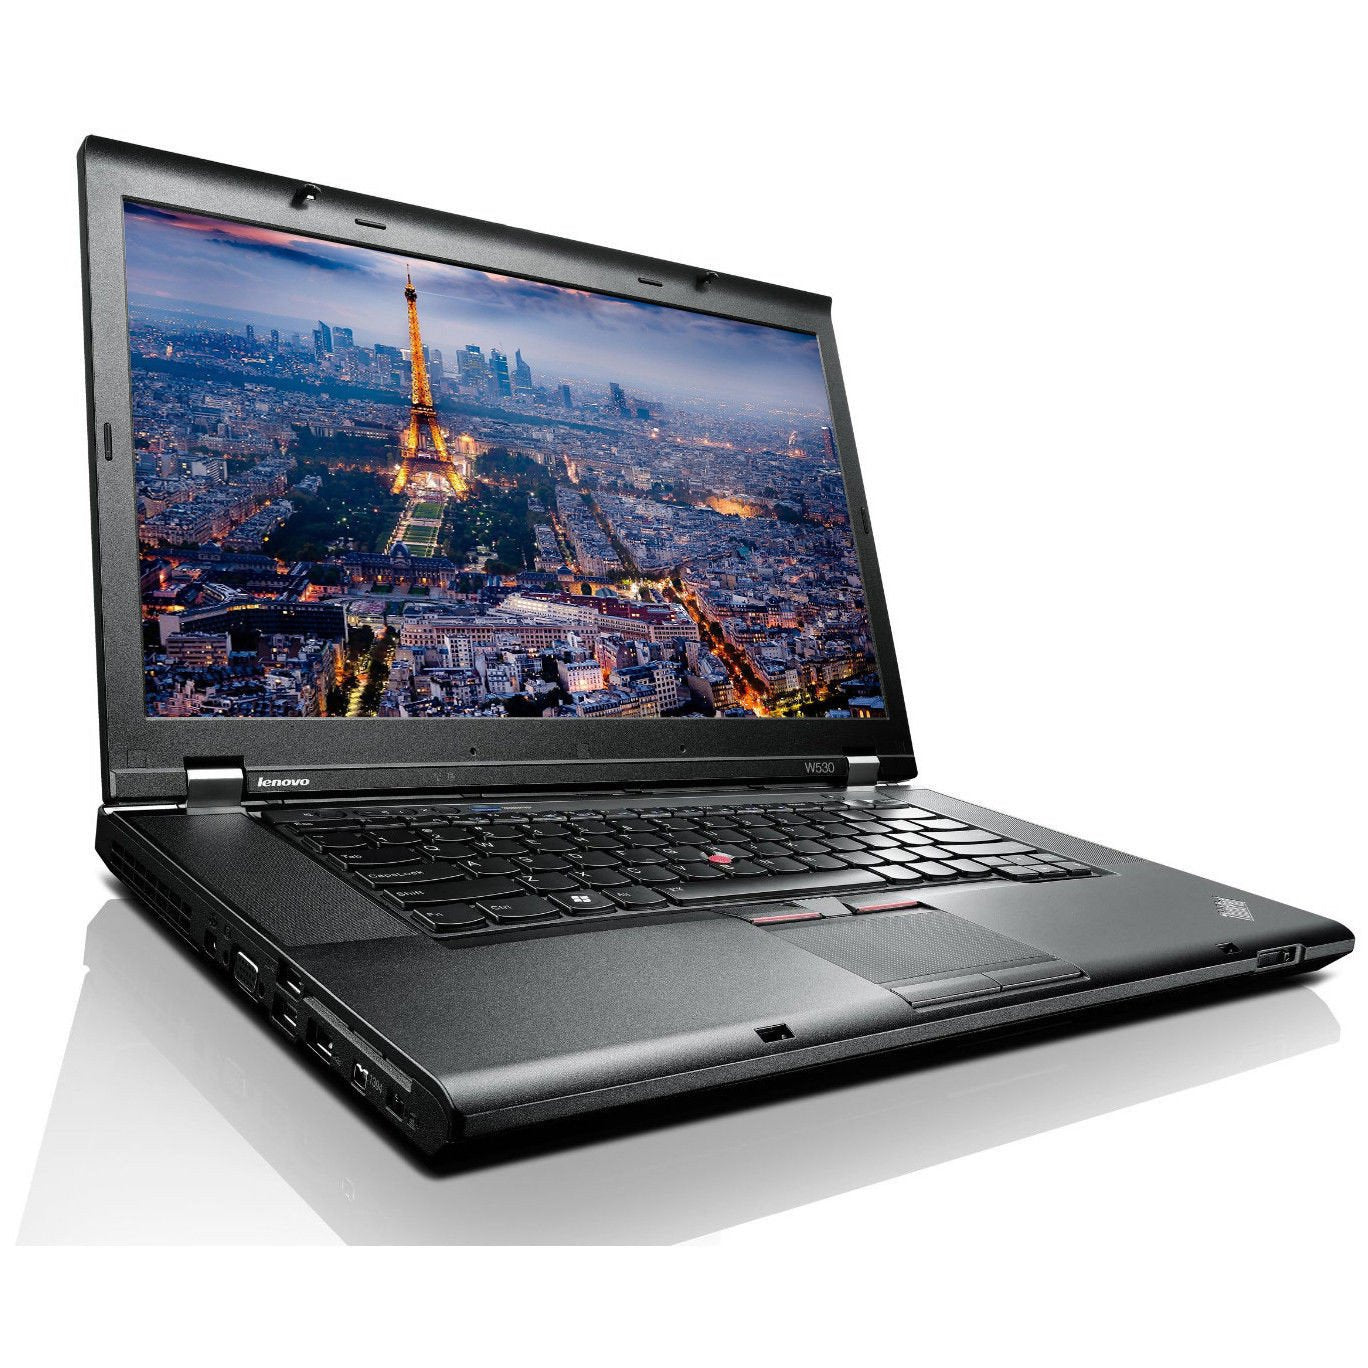 Lenovo ThinkPad T530 Refurbished Laptop on Sale | Refurbish Canada